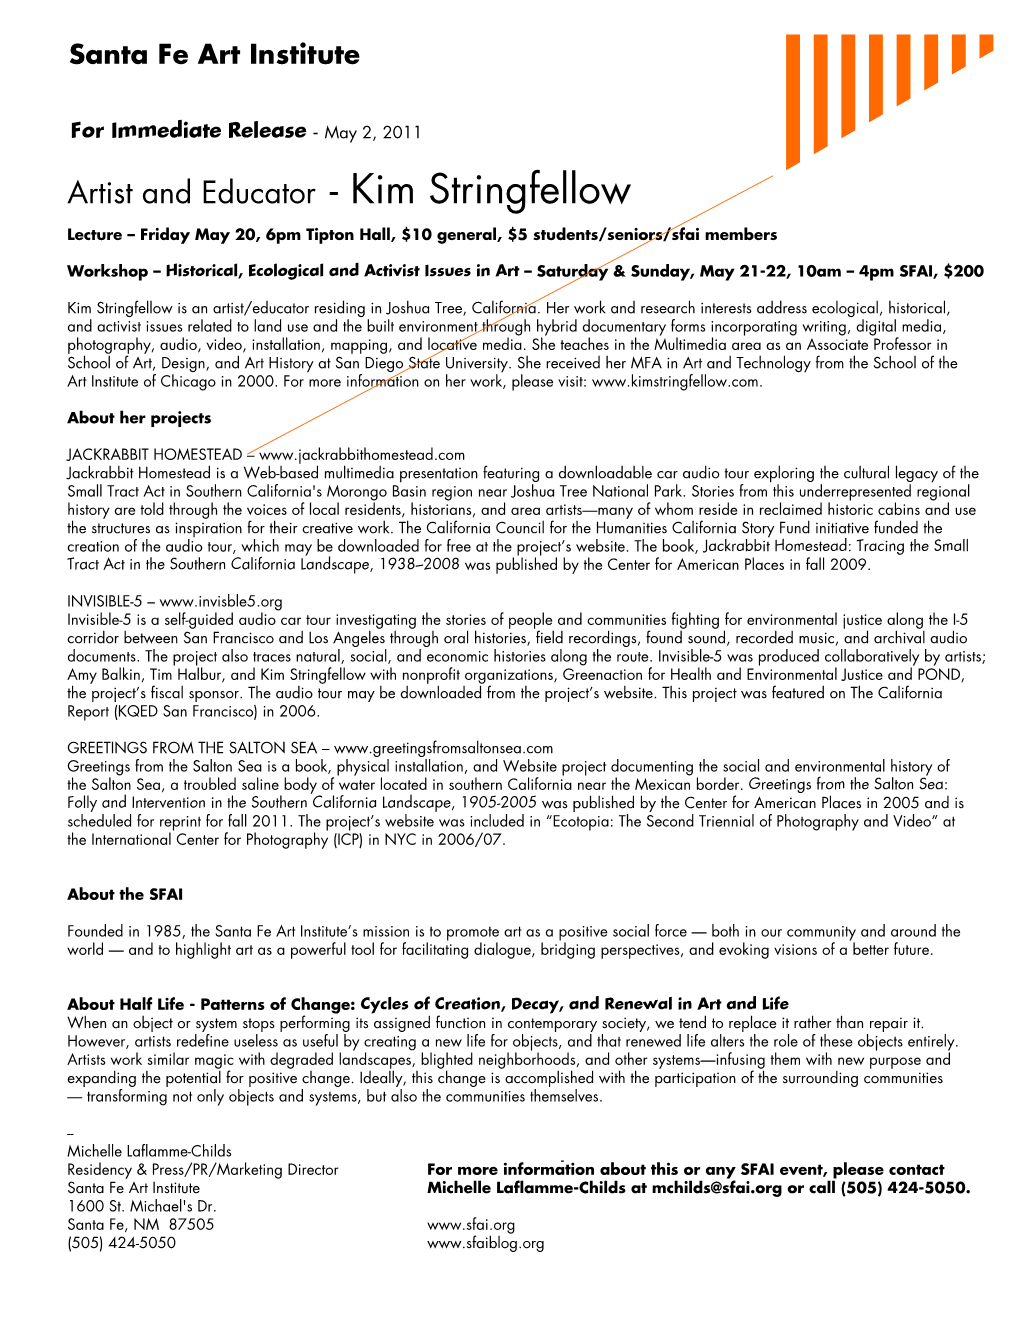 Artist and Educator - Kim Stringfellow Lecture – Friday May 20, 6Pm Tipton Hall, $10 General, $5 Students/Seniors/Sfai Members